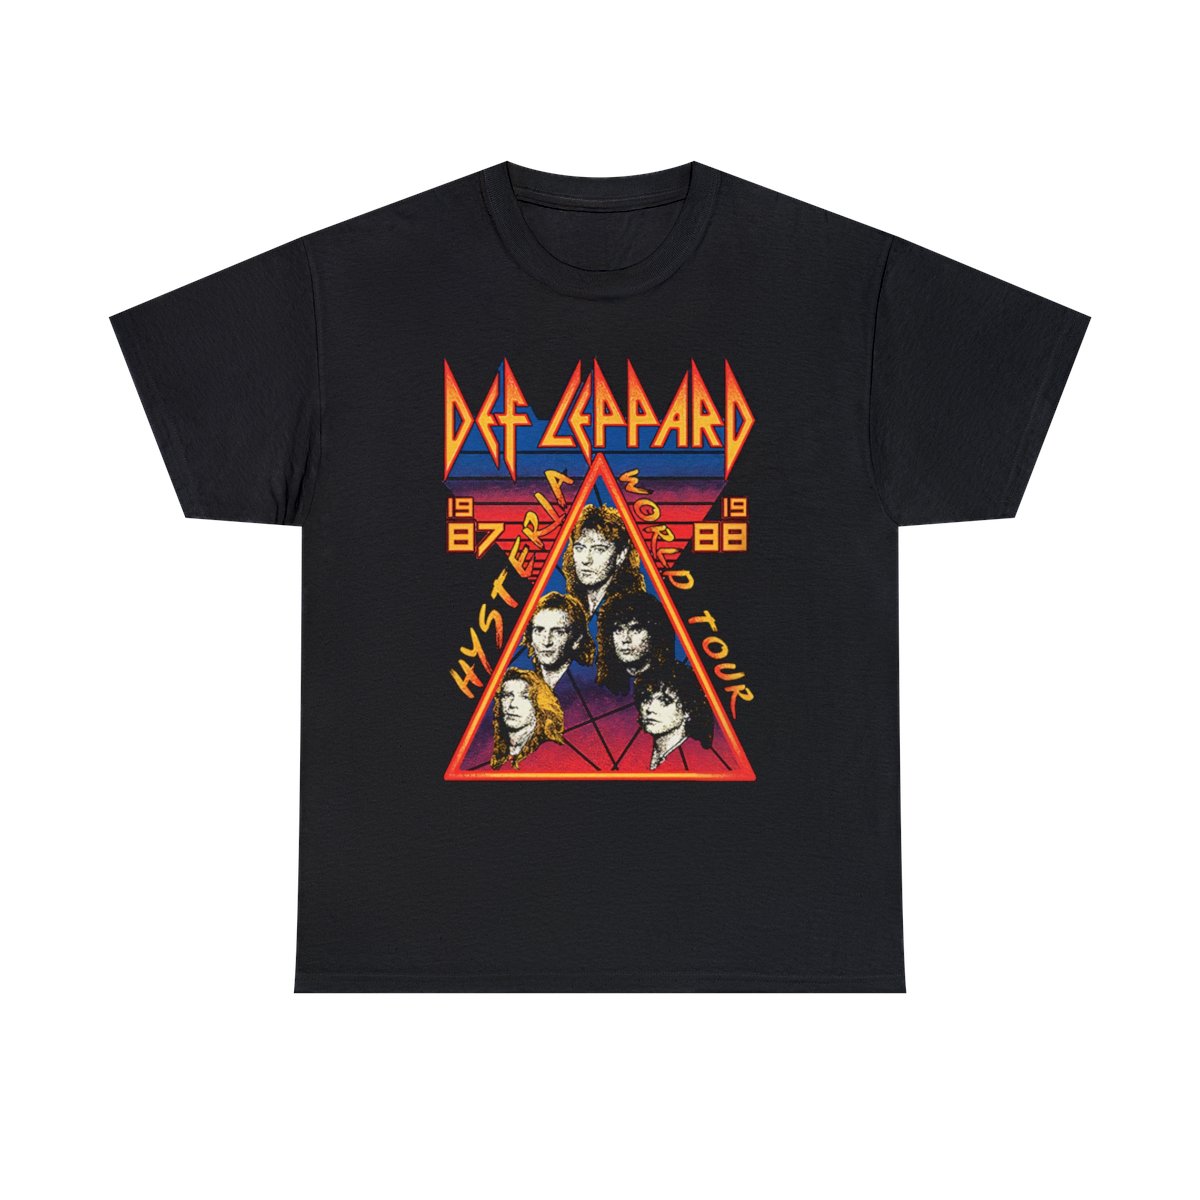 Def Leppard Shirt Classic Def Leppard Hysteria Tour 80s Rock Music T-Shirt Unisex Heavy Cotton Tee